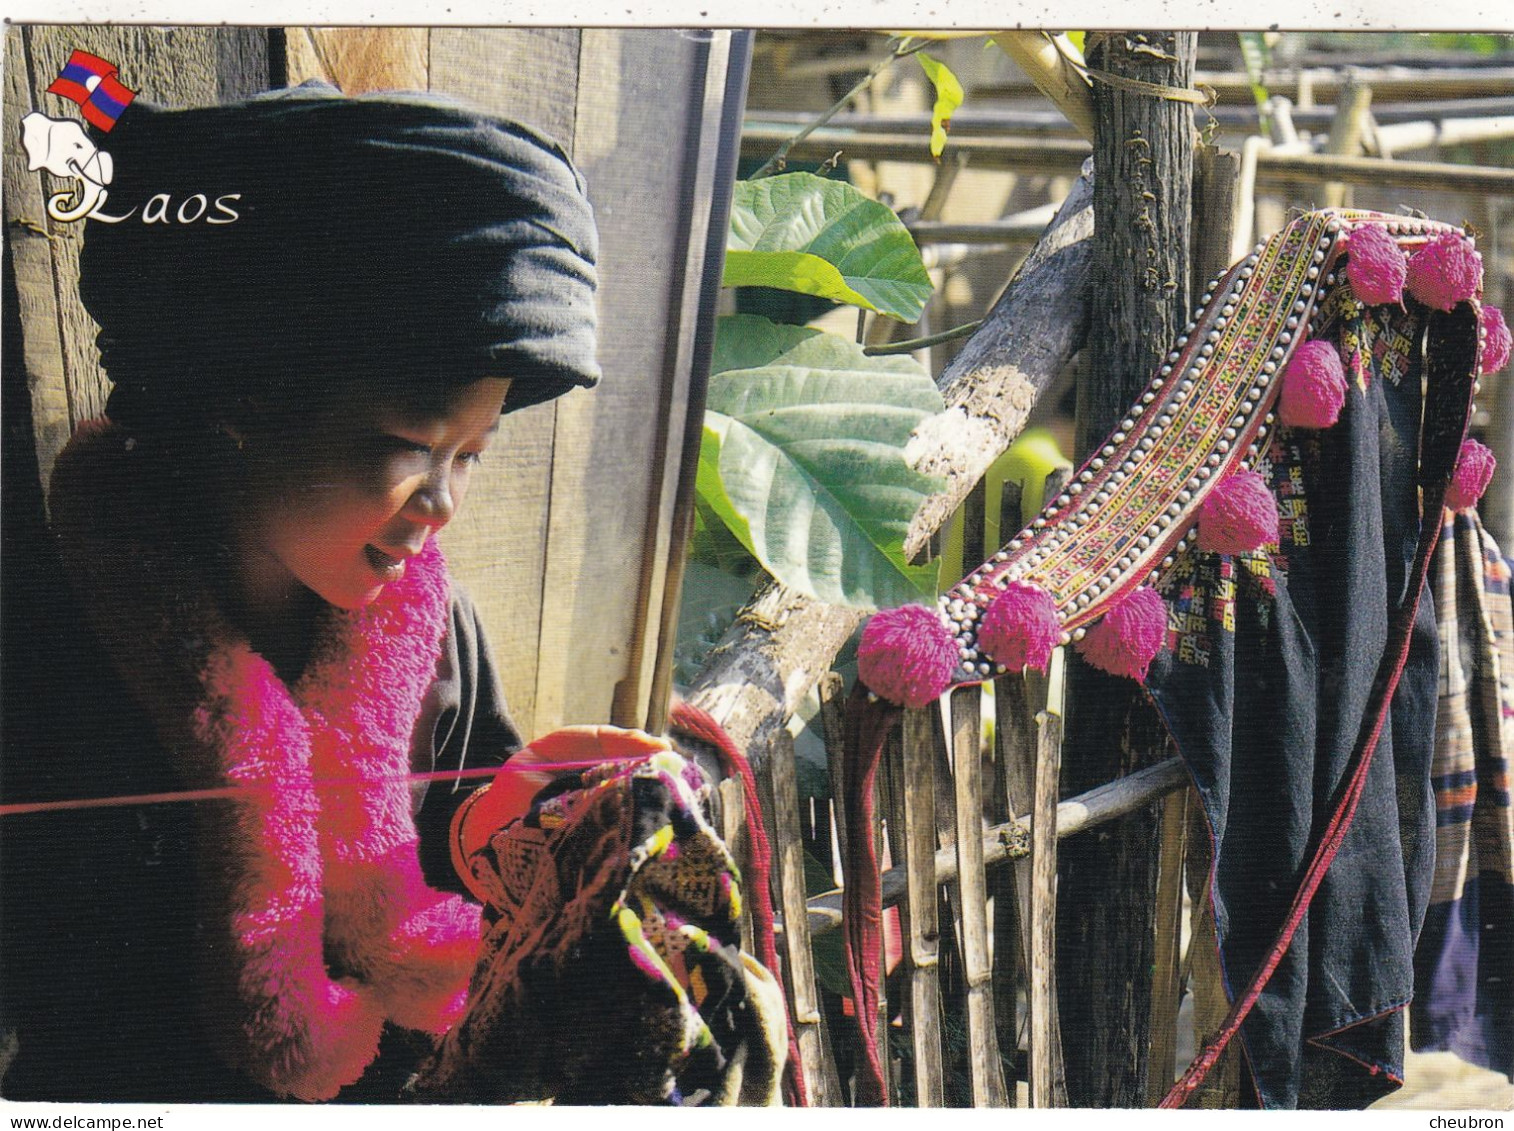 LAOS. VIENTIANE (ENVOYE DE). " YAO WOMEN SEWING HER TRADITIONAL COSTUME ". ANNEE 2004 + TEXTE + TIMBRE. FOTMAT 17x12 Cm - Laos